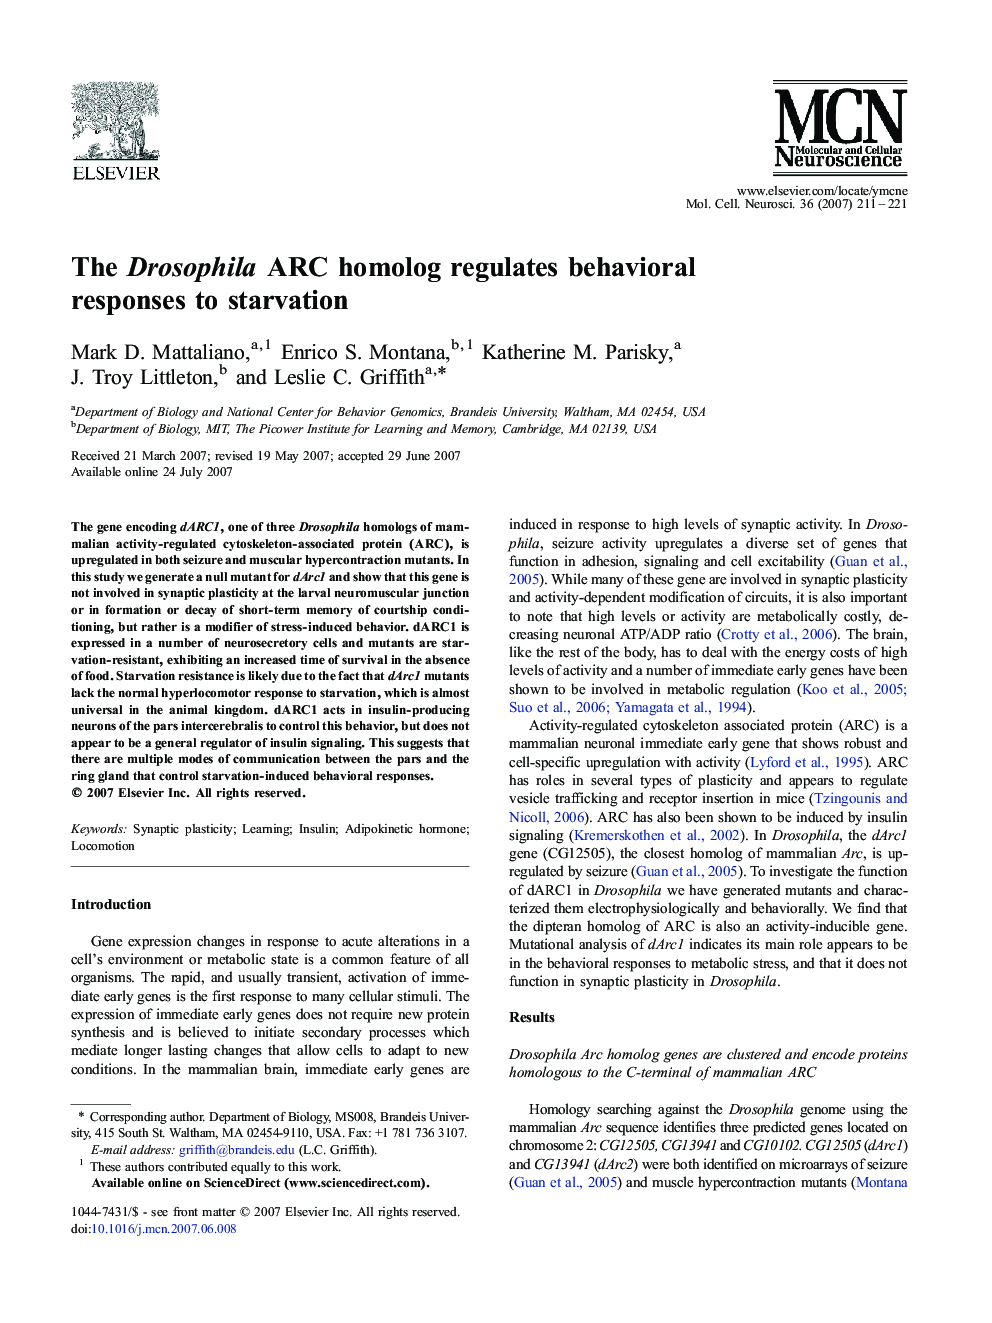 The Drosophila ARC homolog regulates behavioral responses to starvation